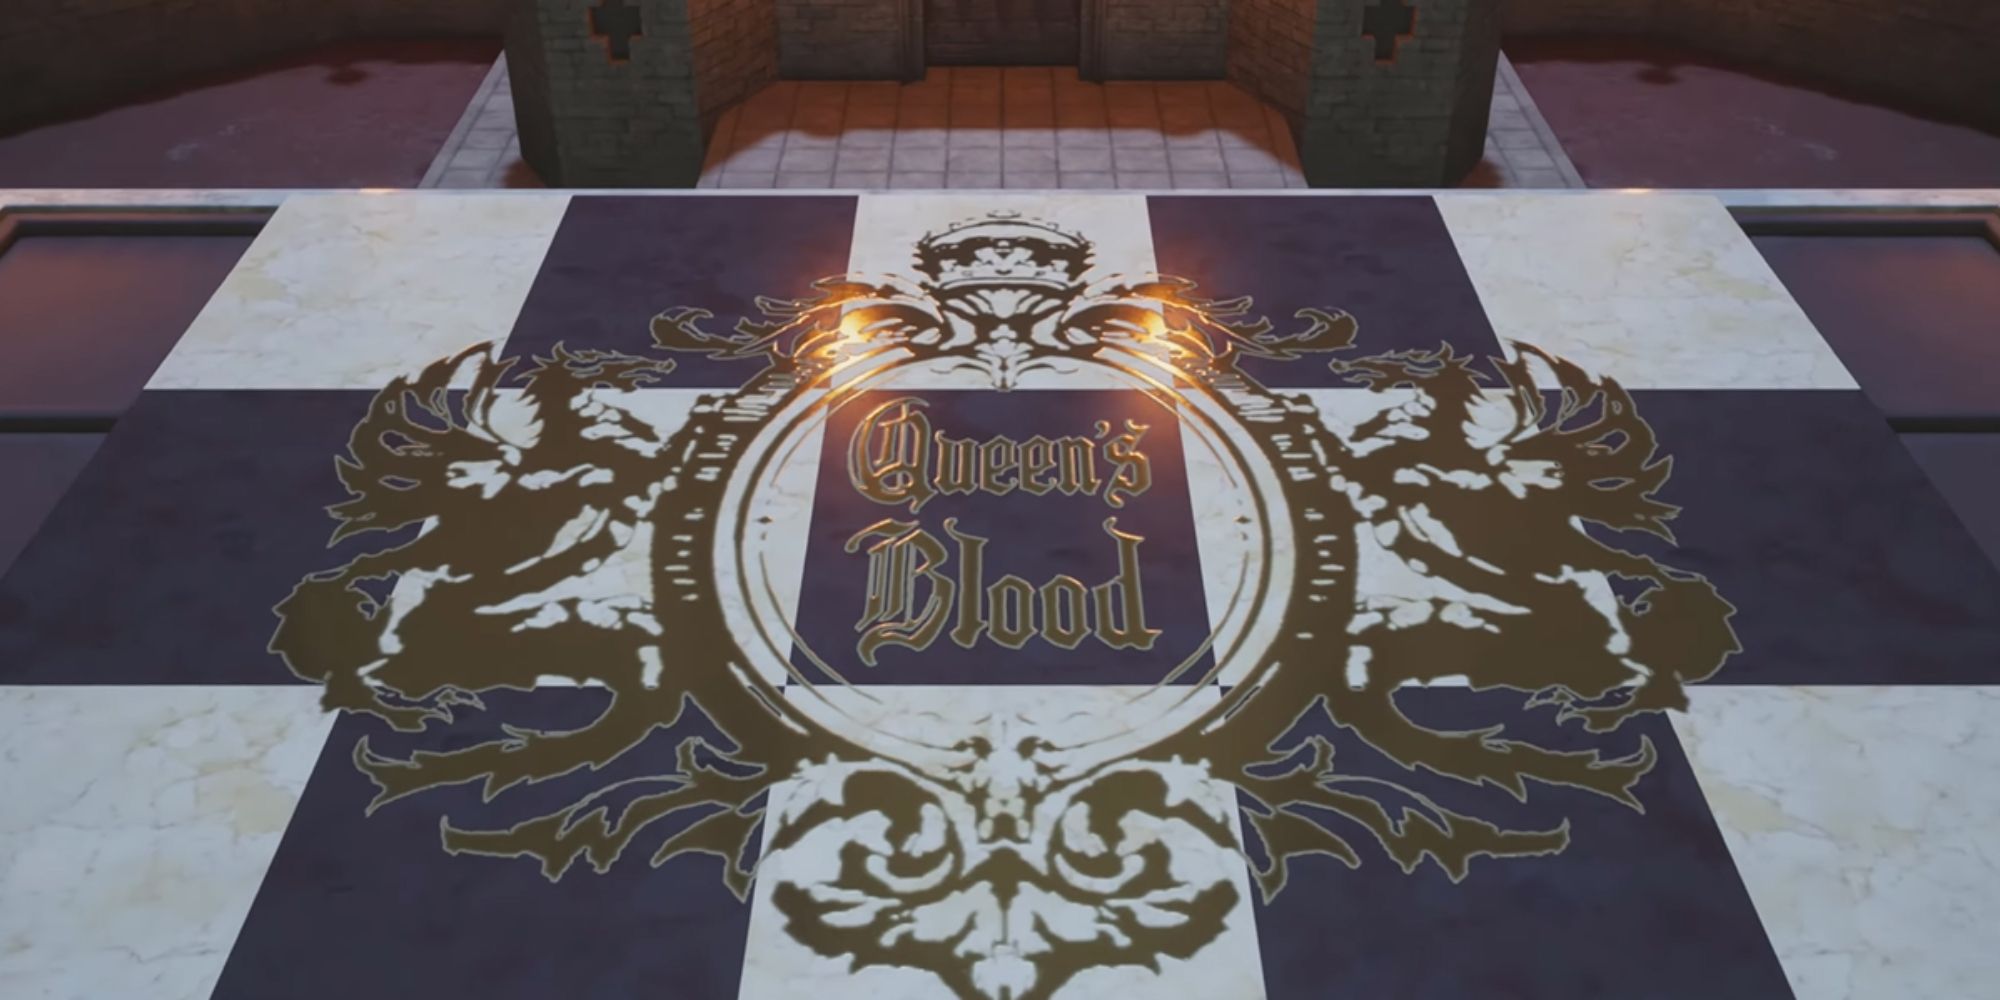 Final Fantasy 7 Queen's Blood